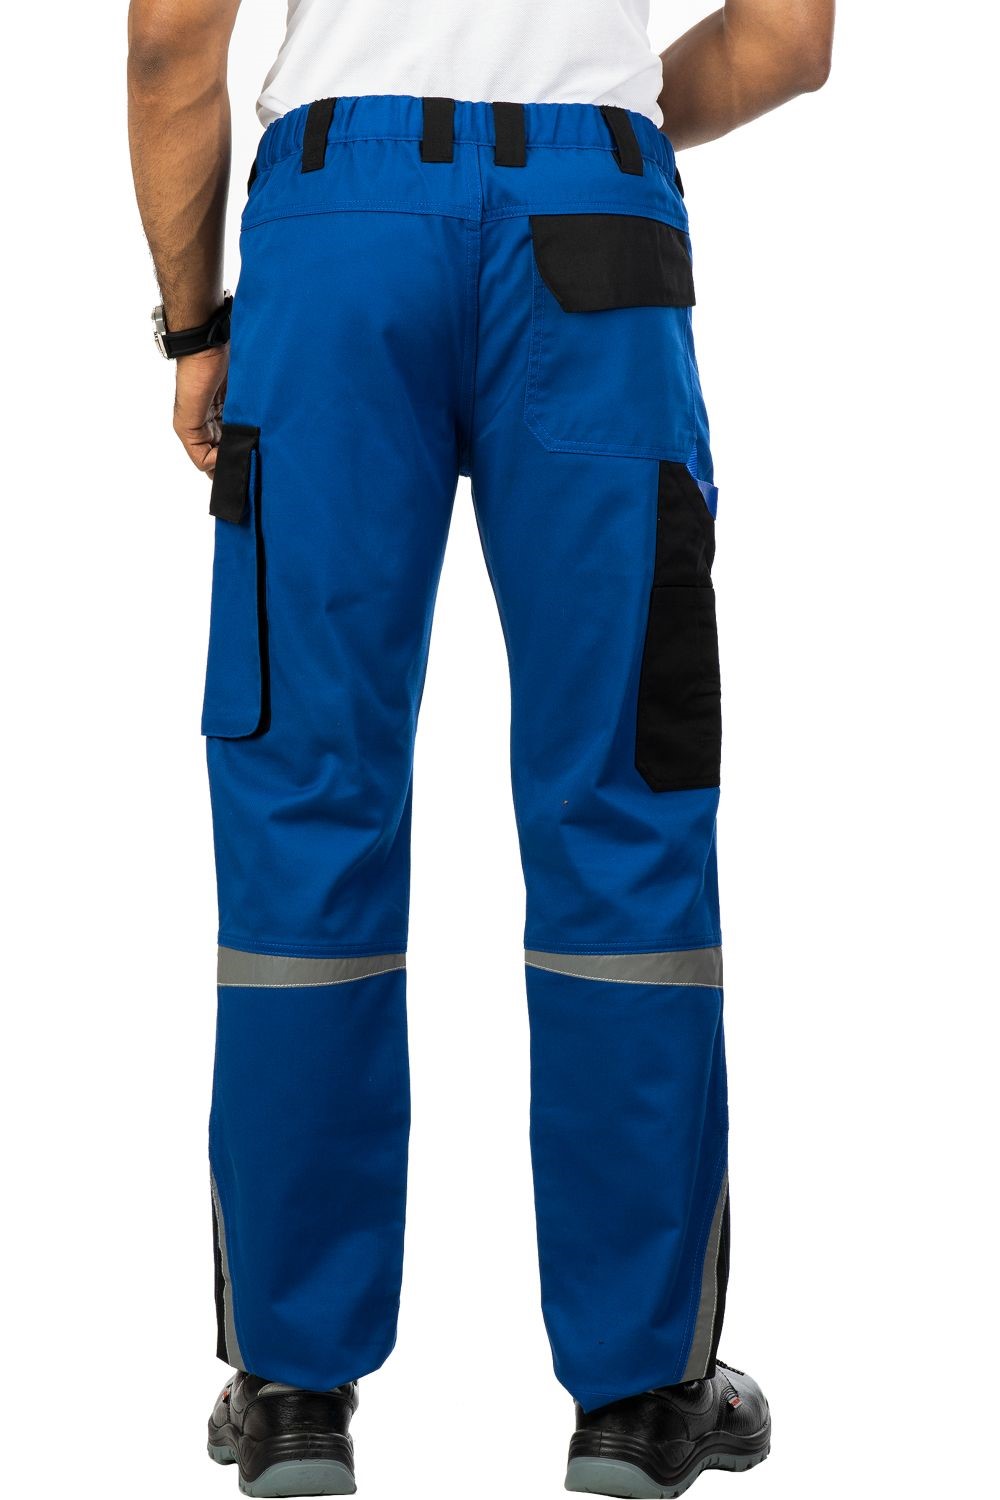 Colorado Royal Blue/Black Industrial Design Trousers